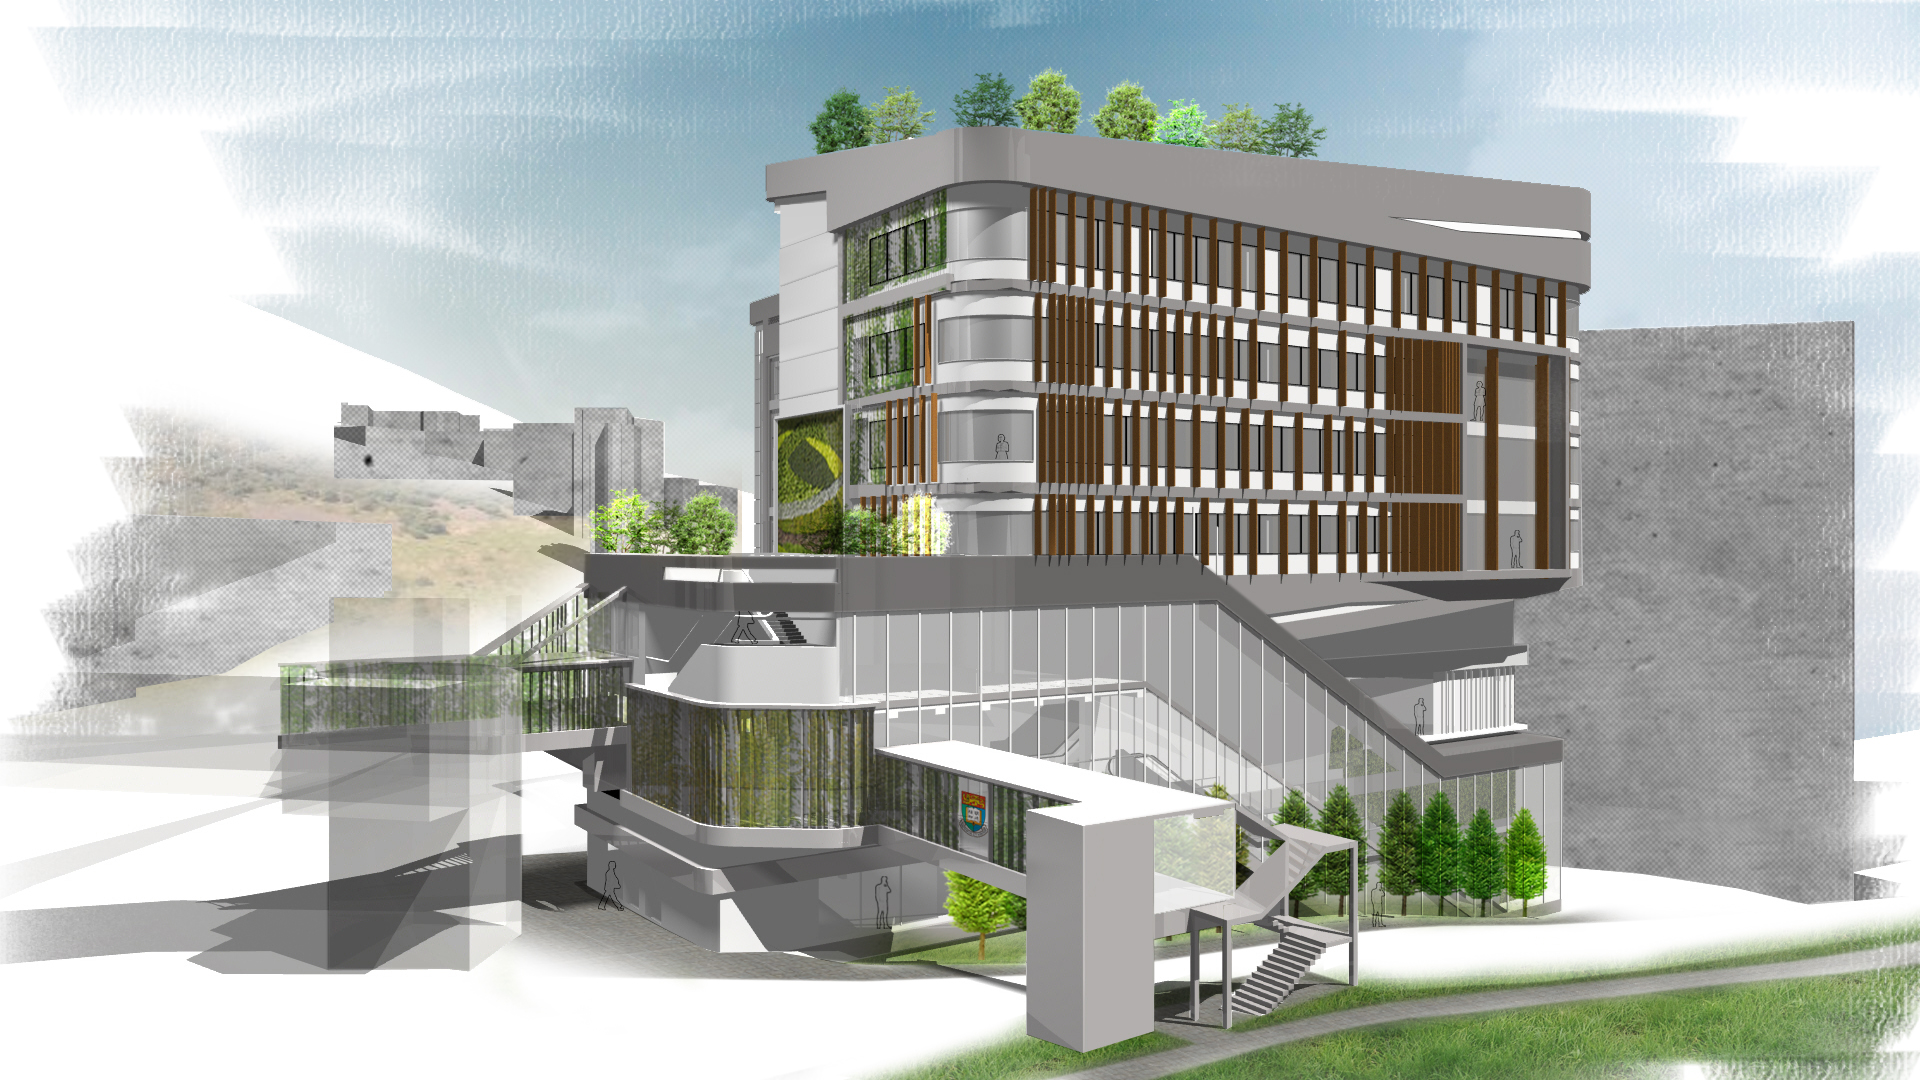 Concept art of HKU medical campus development.